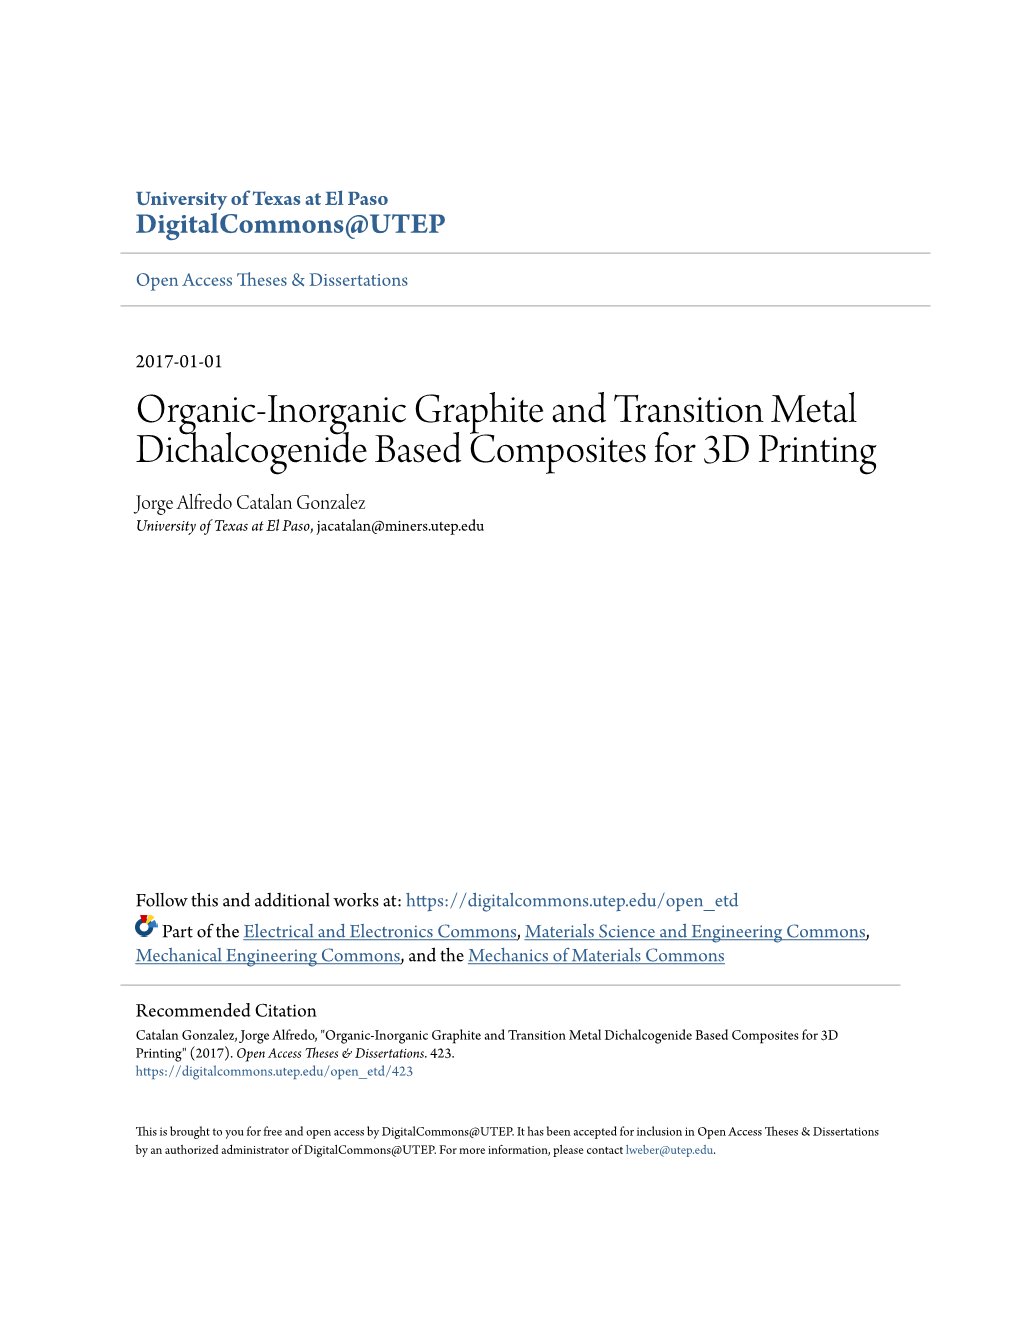 Organic-Inorganic Graphite and Transition Metal Dichalcogenide